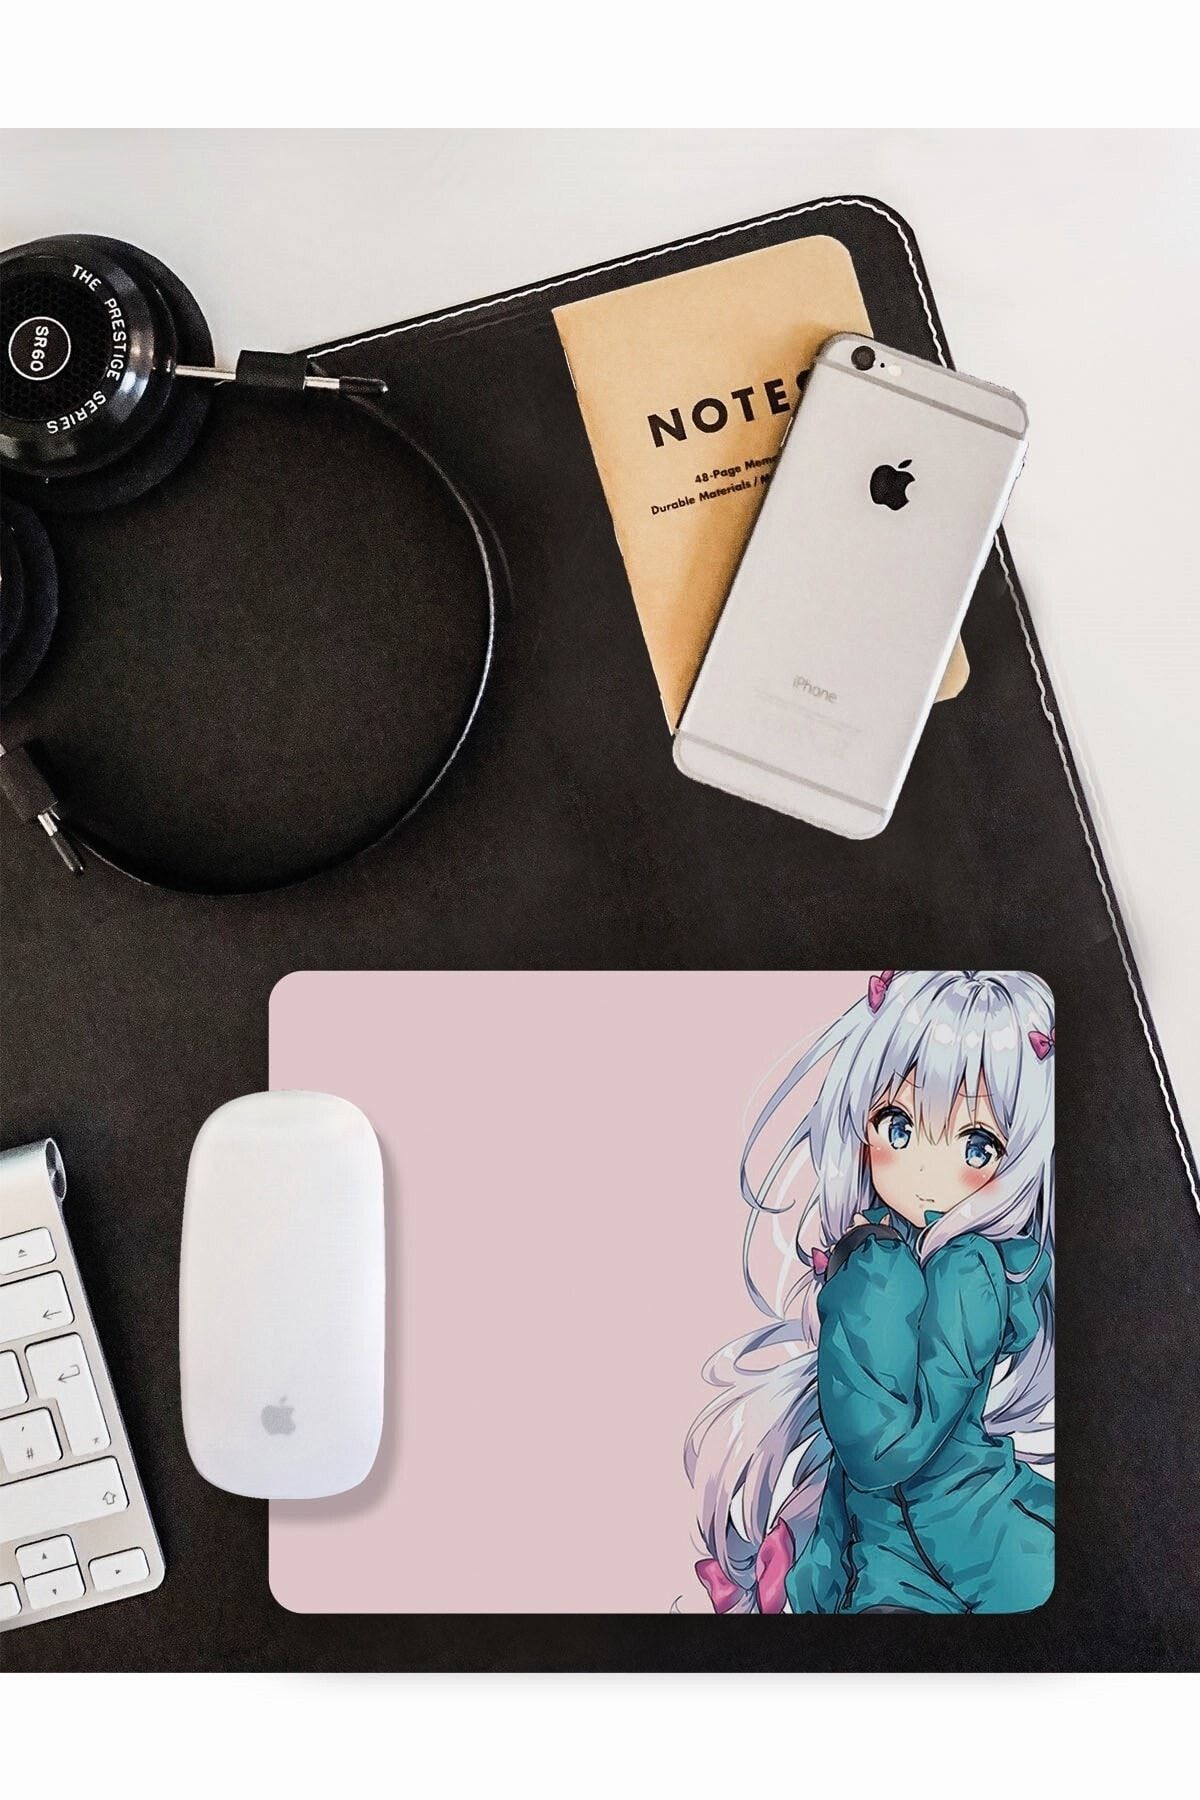 WuW Anime Girl Mouse Pad